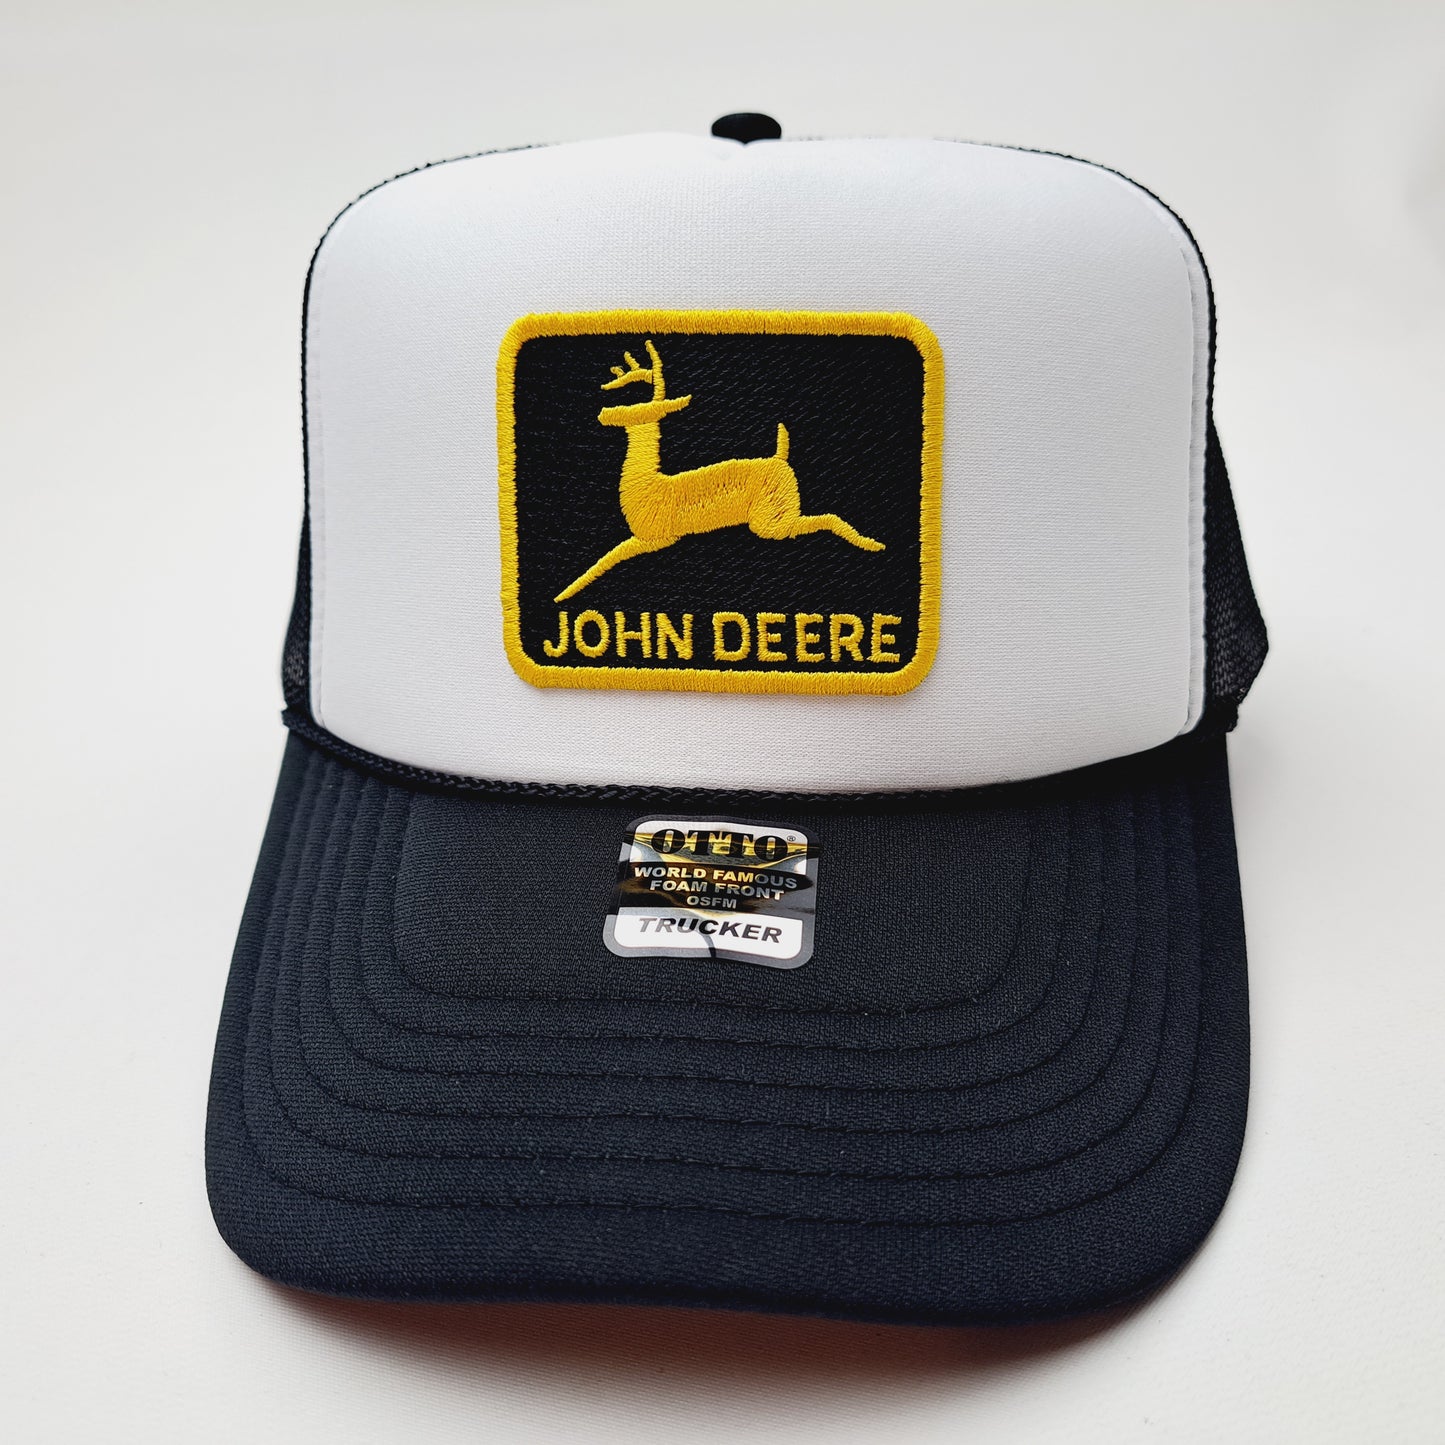 John Deere Embroidered Patch Foam Trucker Mesh Cap Hat Black Snapback